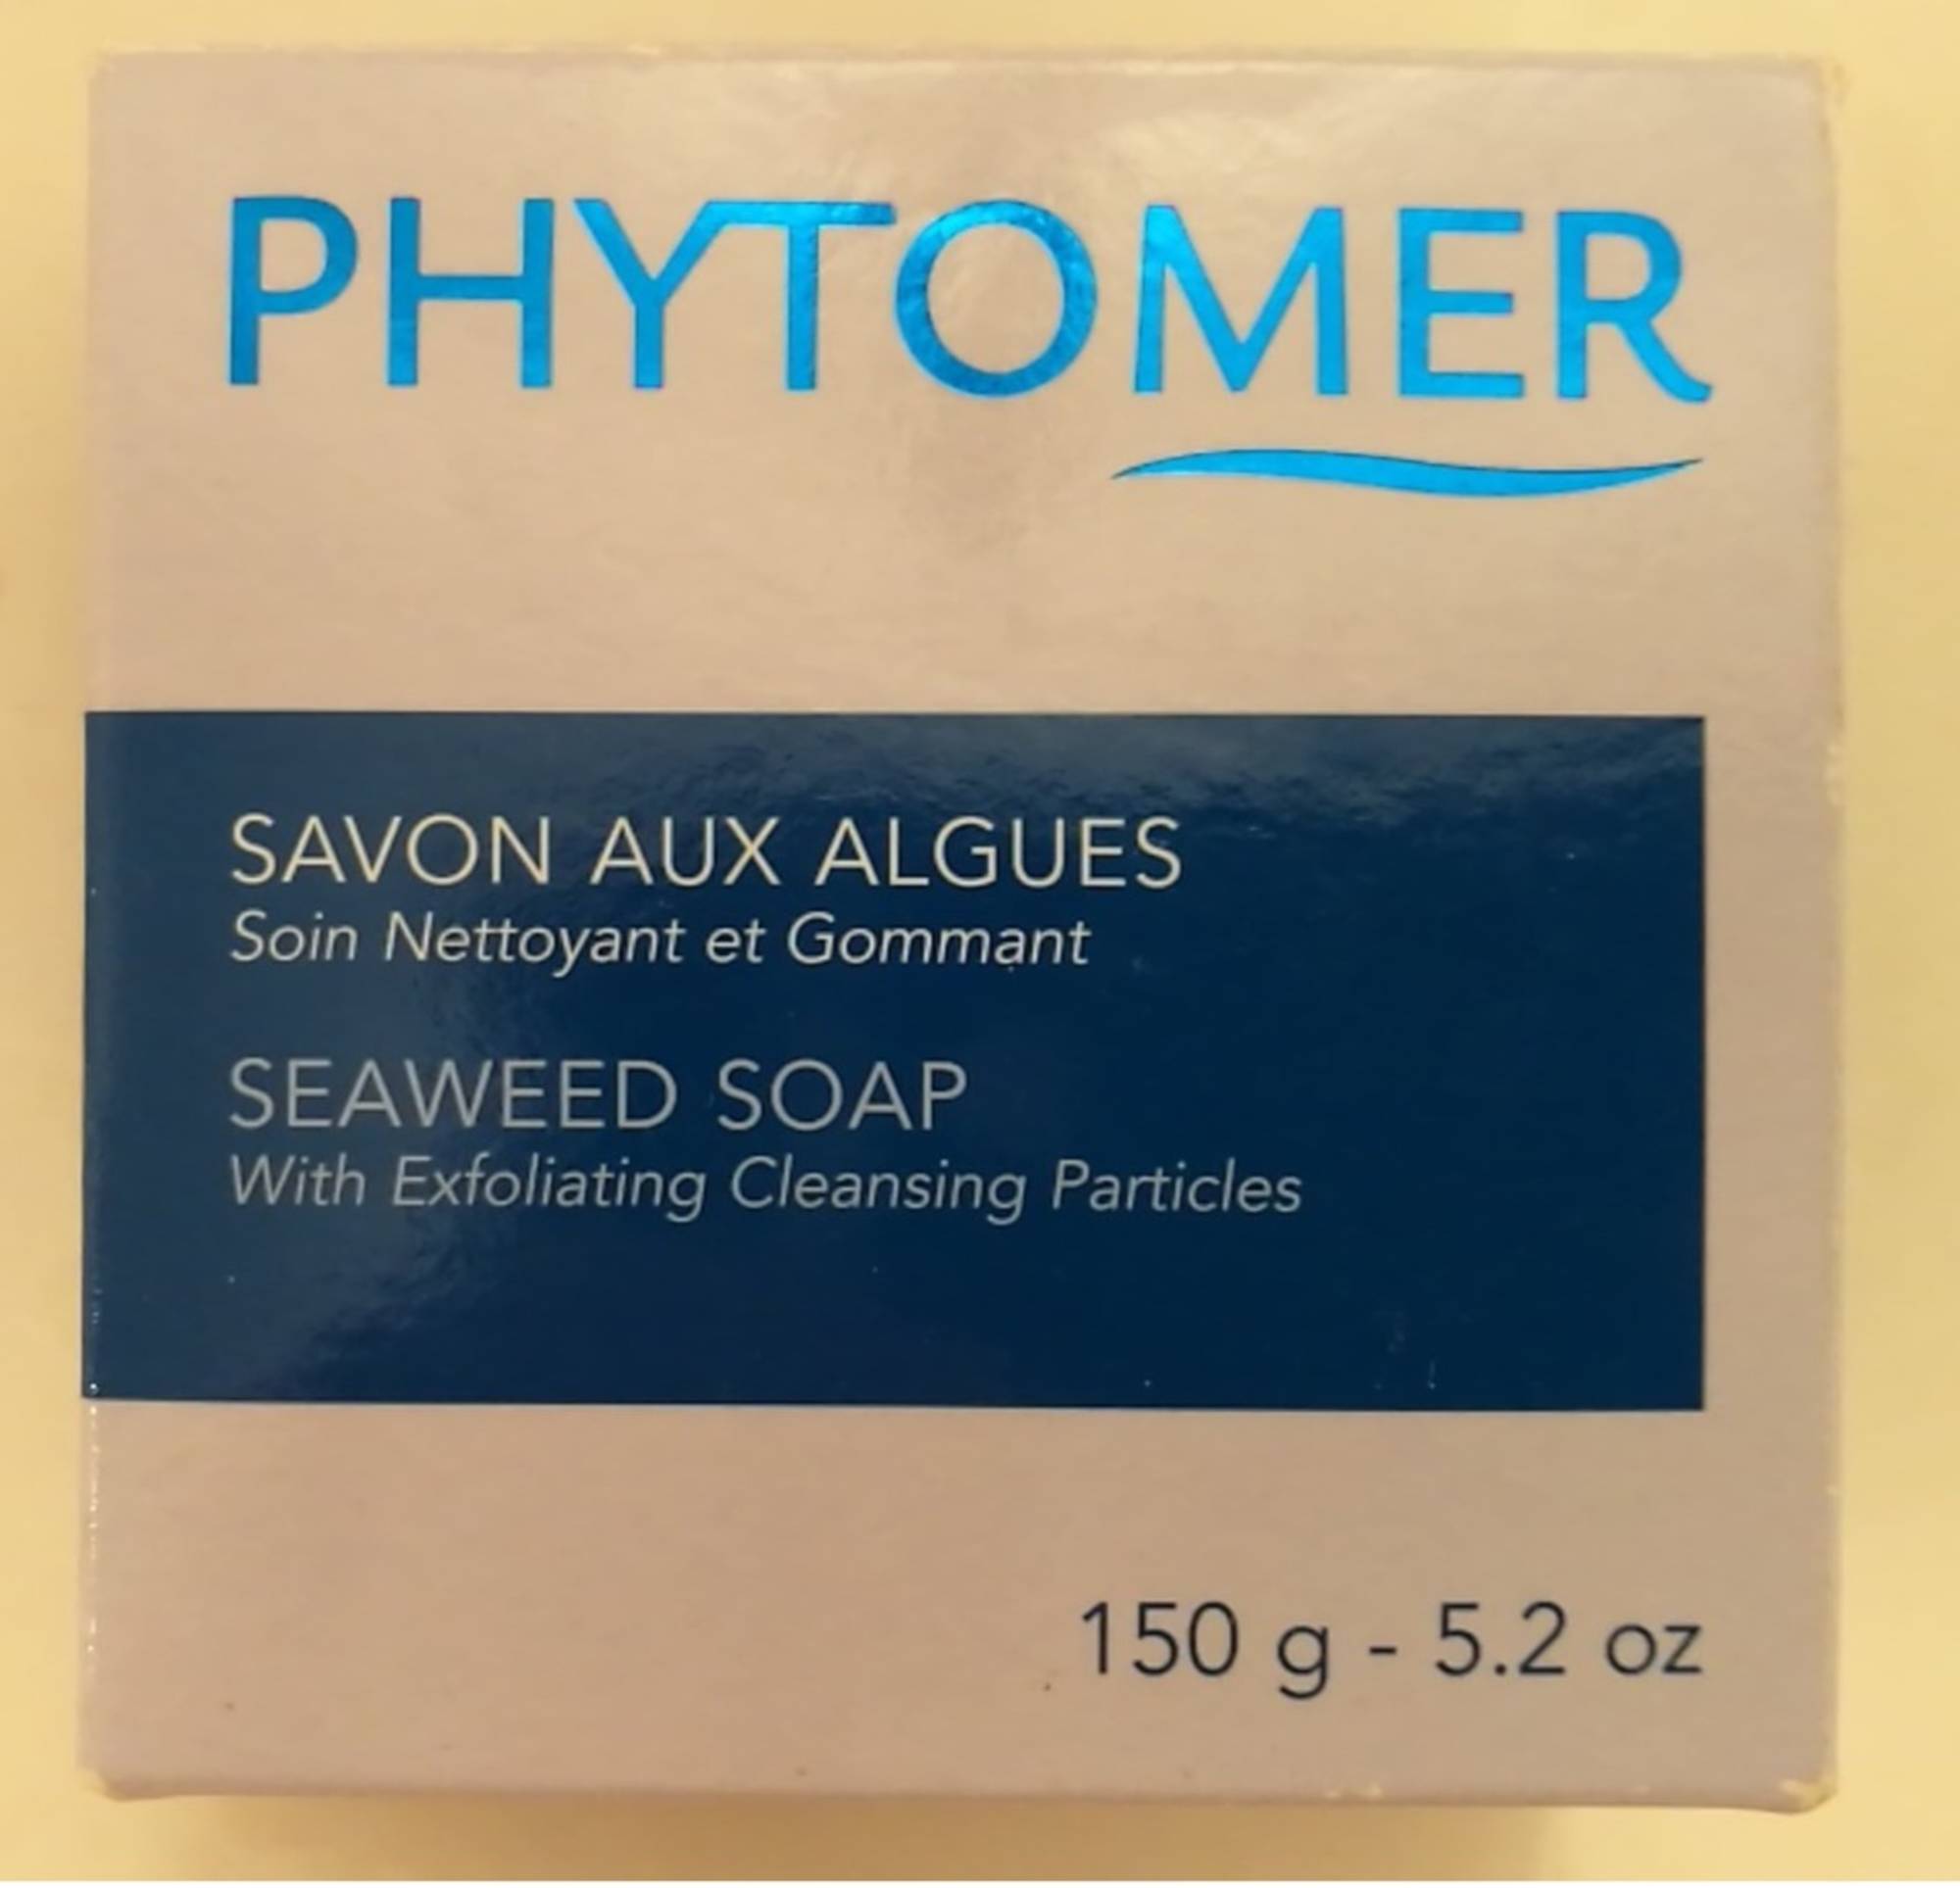 PHYTOMER - Savon aux algues - Soin nettoyant et gommant